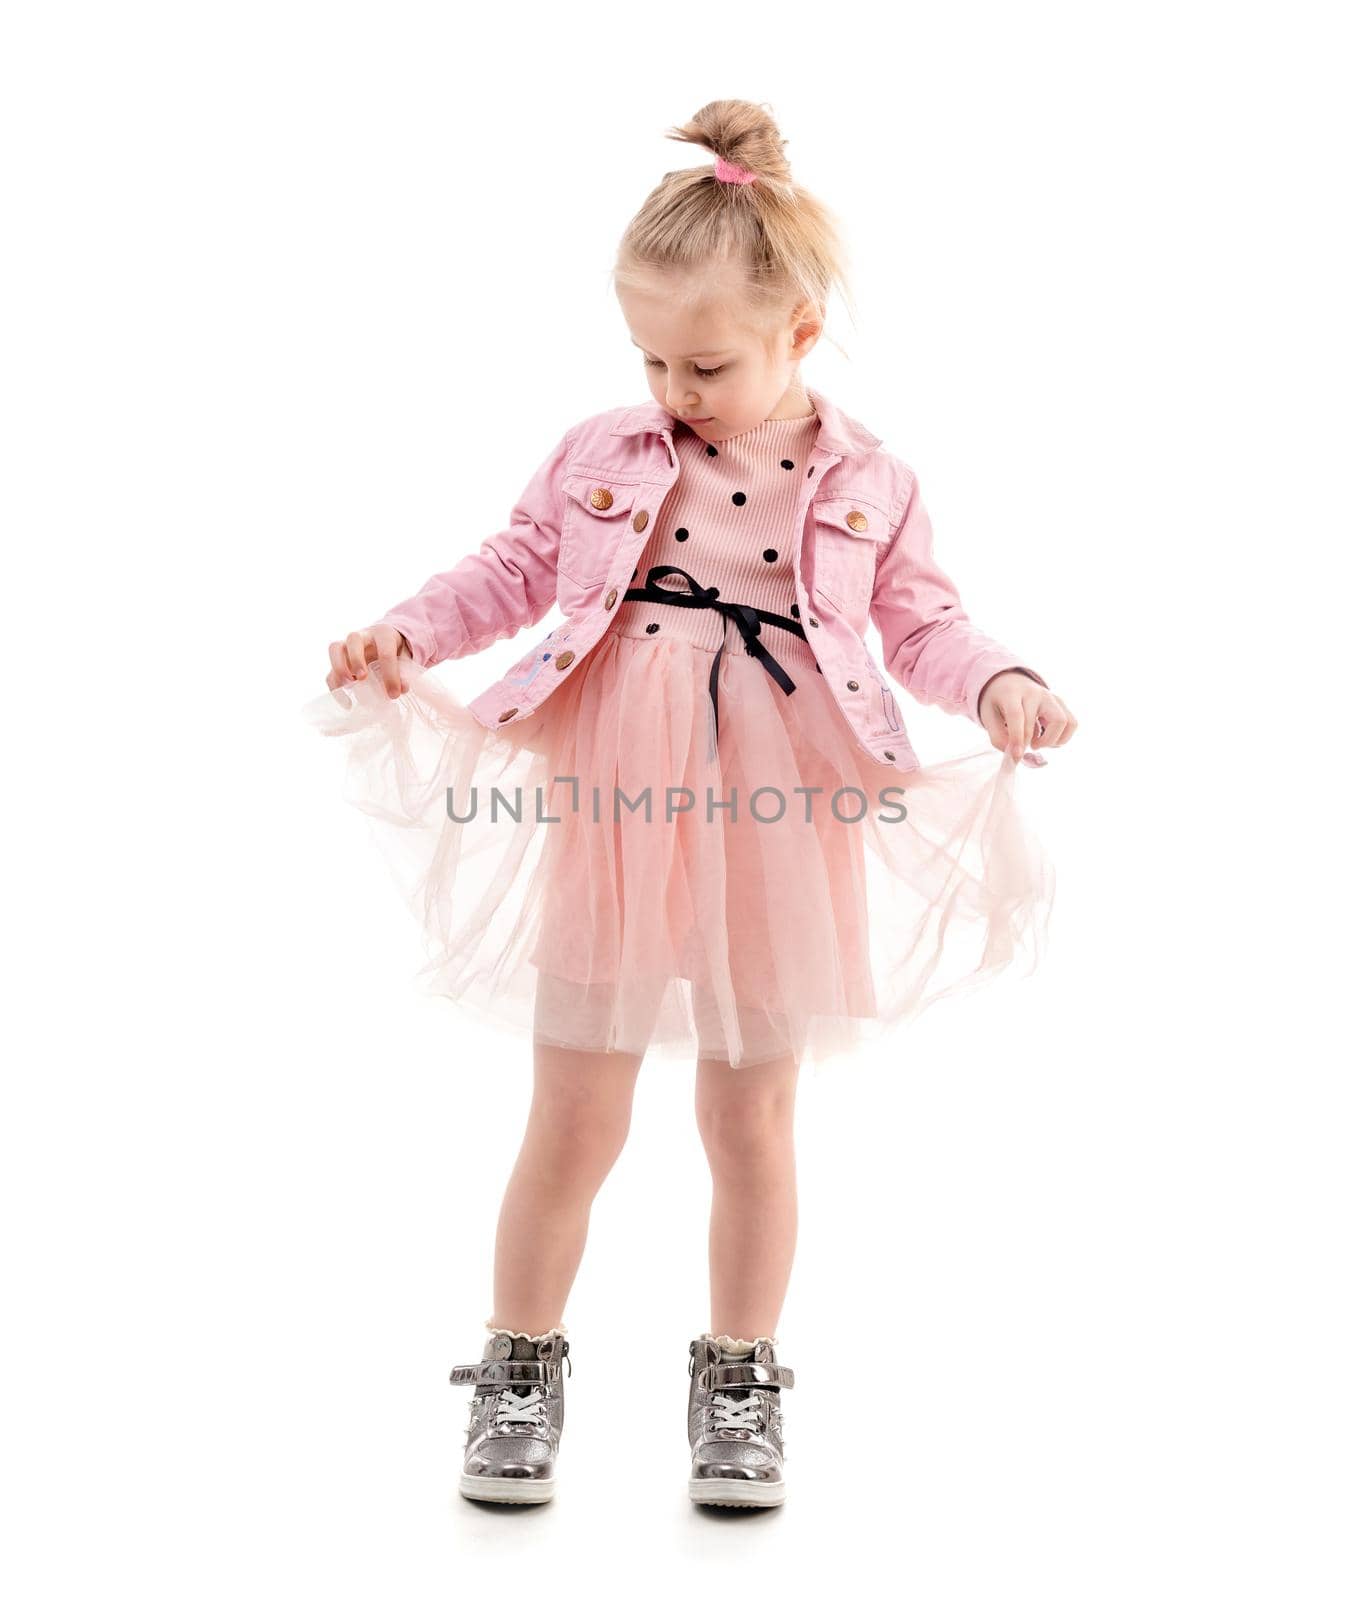 Cute girl holding her skirt, ready to dance by tan4ikk1